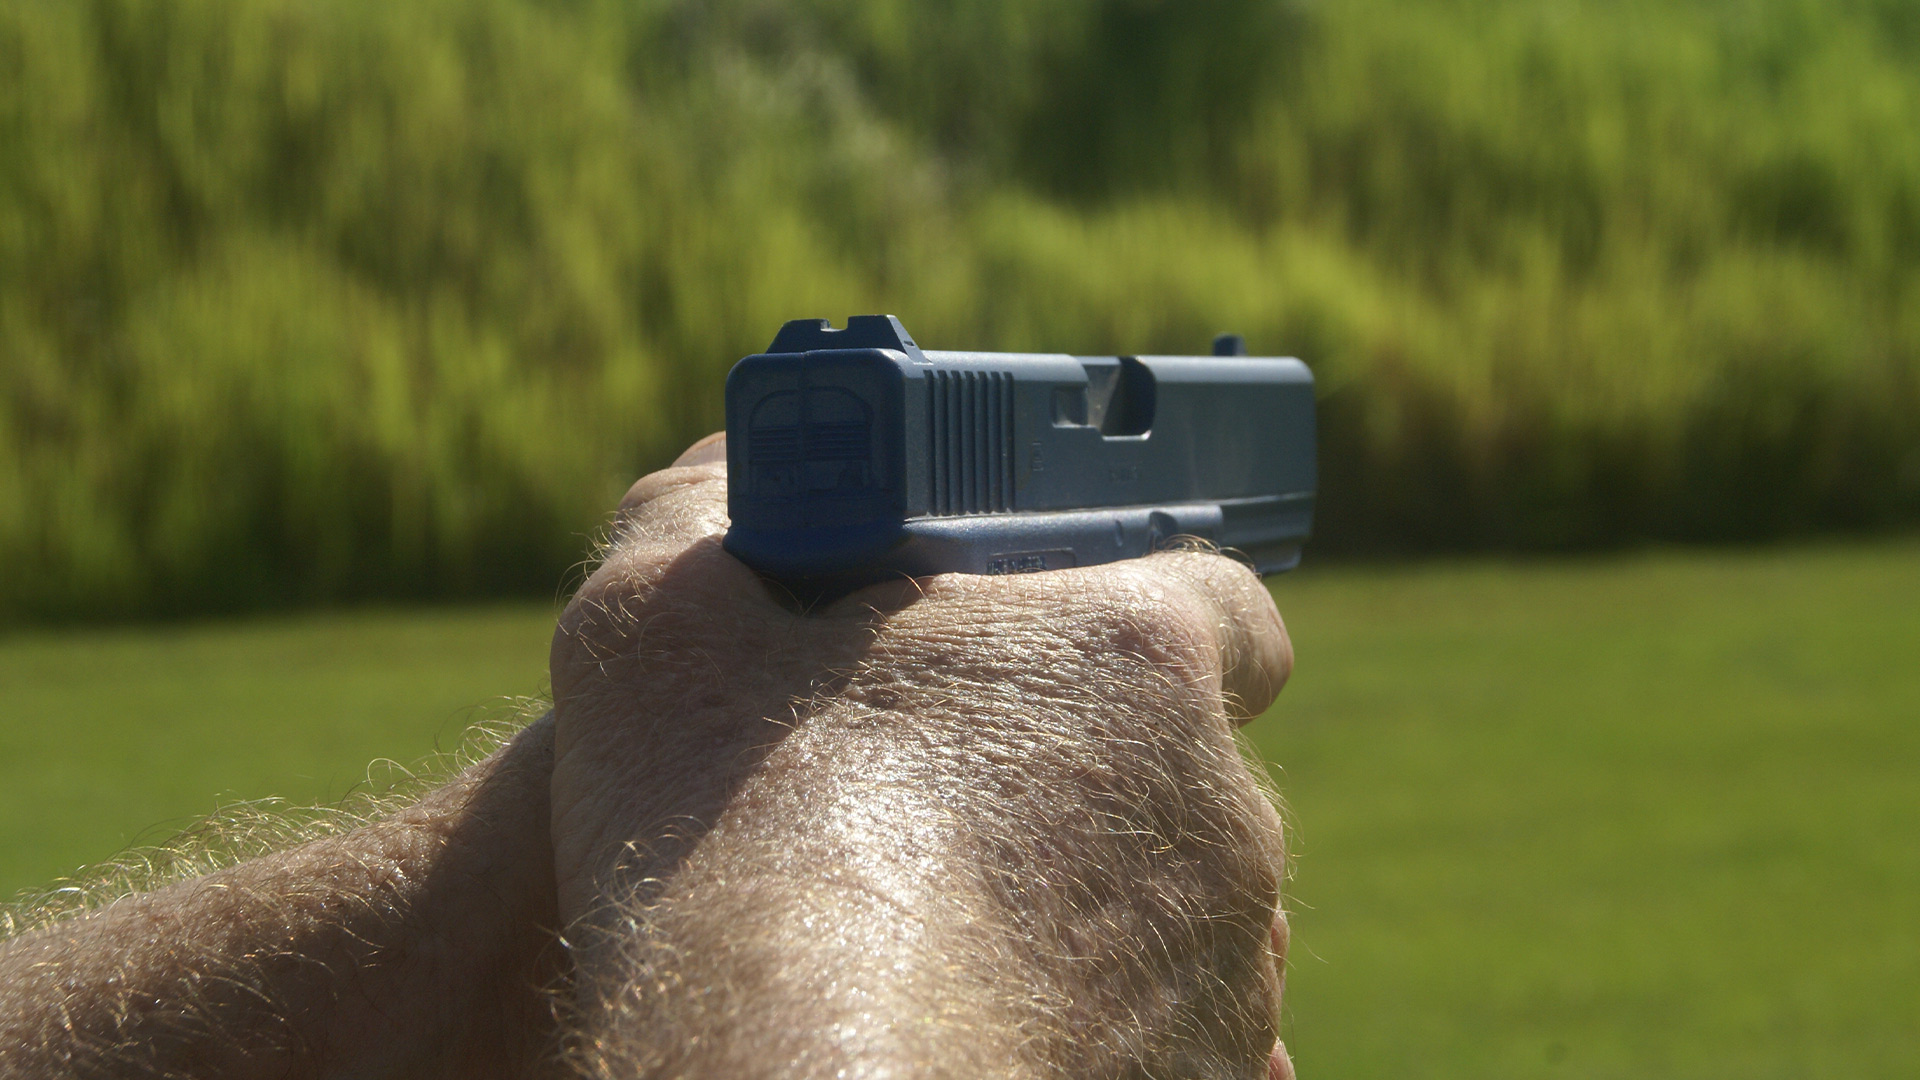 Freestyle pistol grip